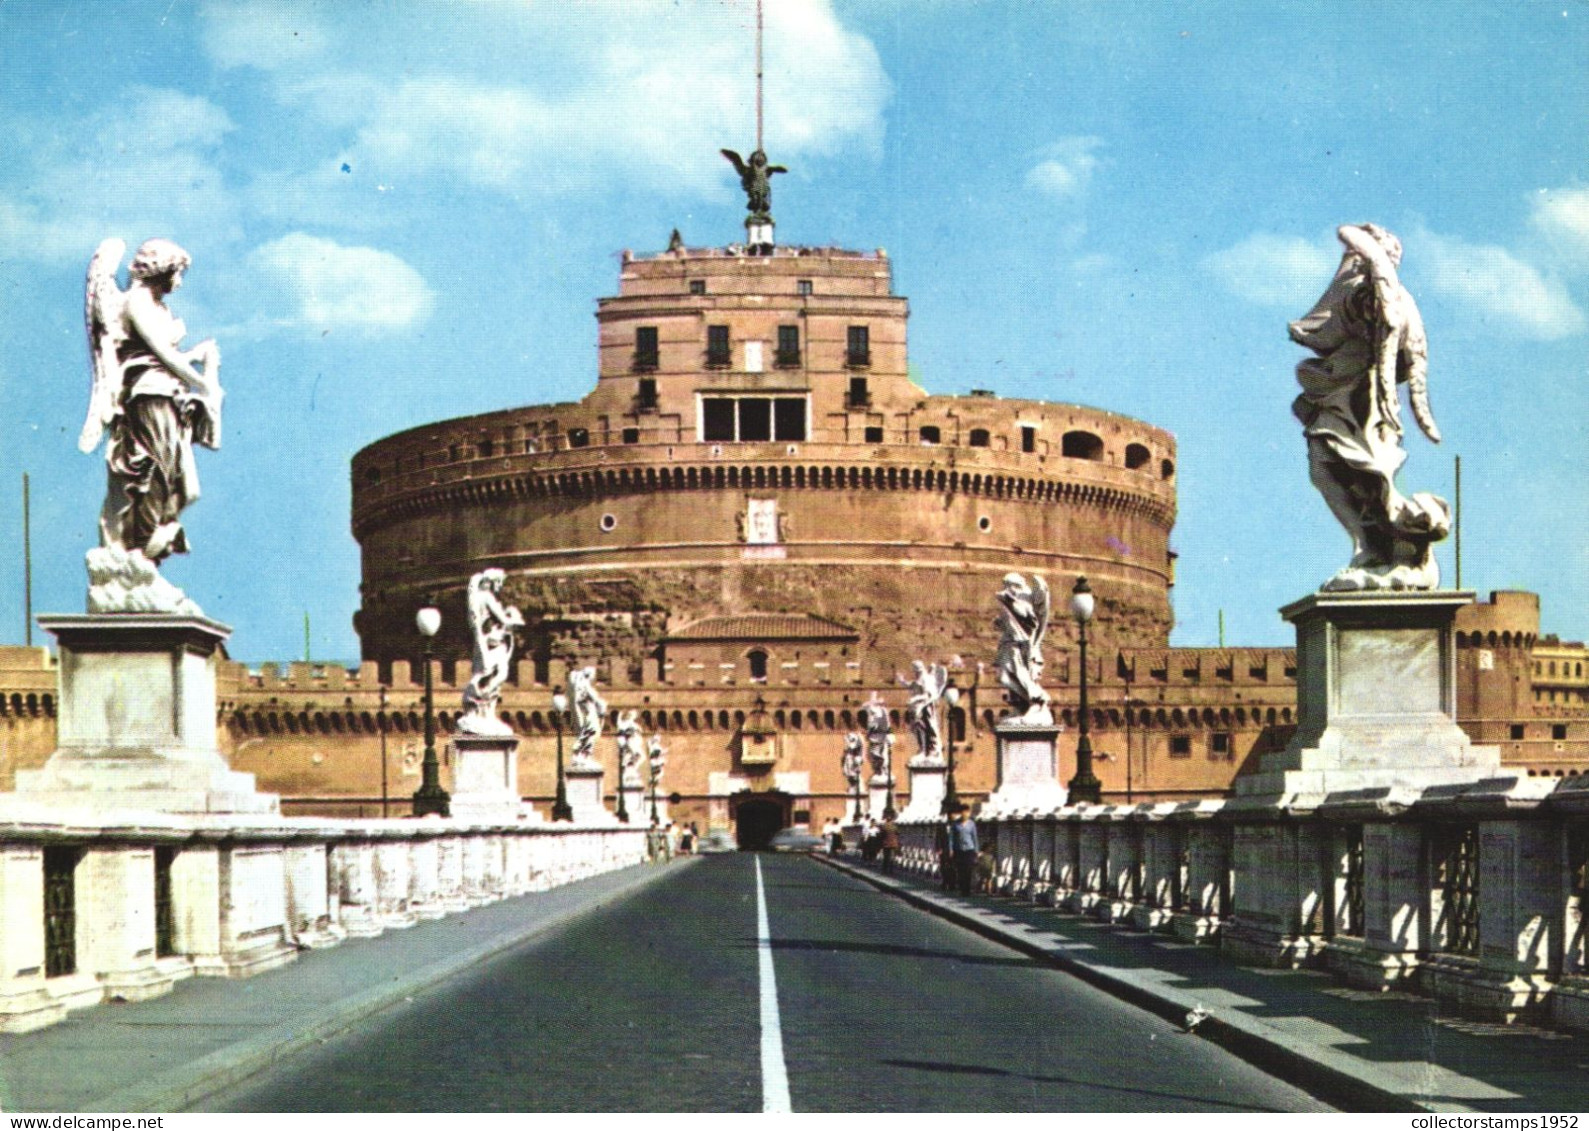 ROME, SAINT ANGELO BRIDGE, CASTLE, ARCHITECTURE, STATUE, ITALY - Pontes